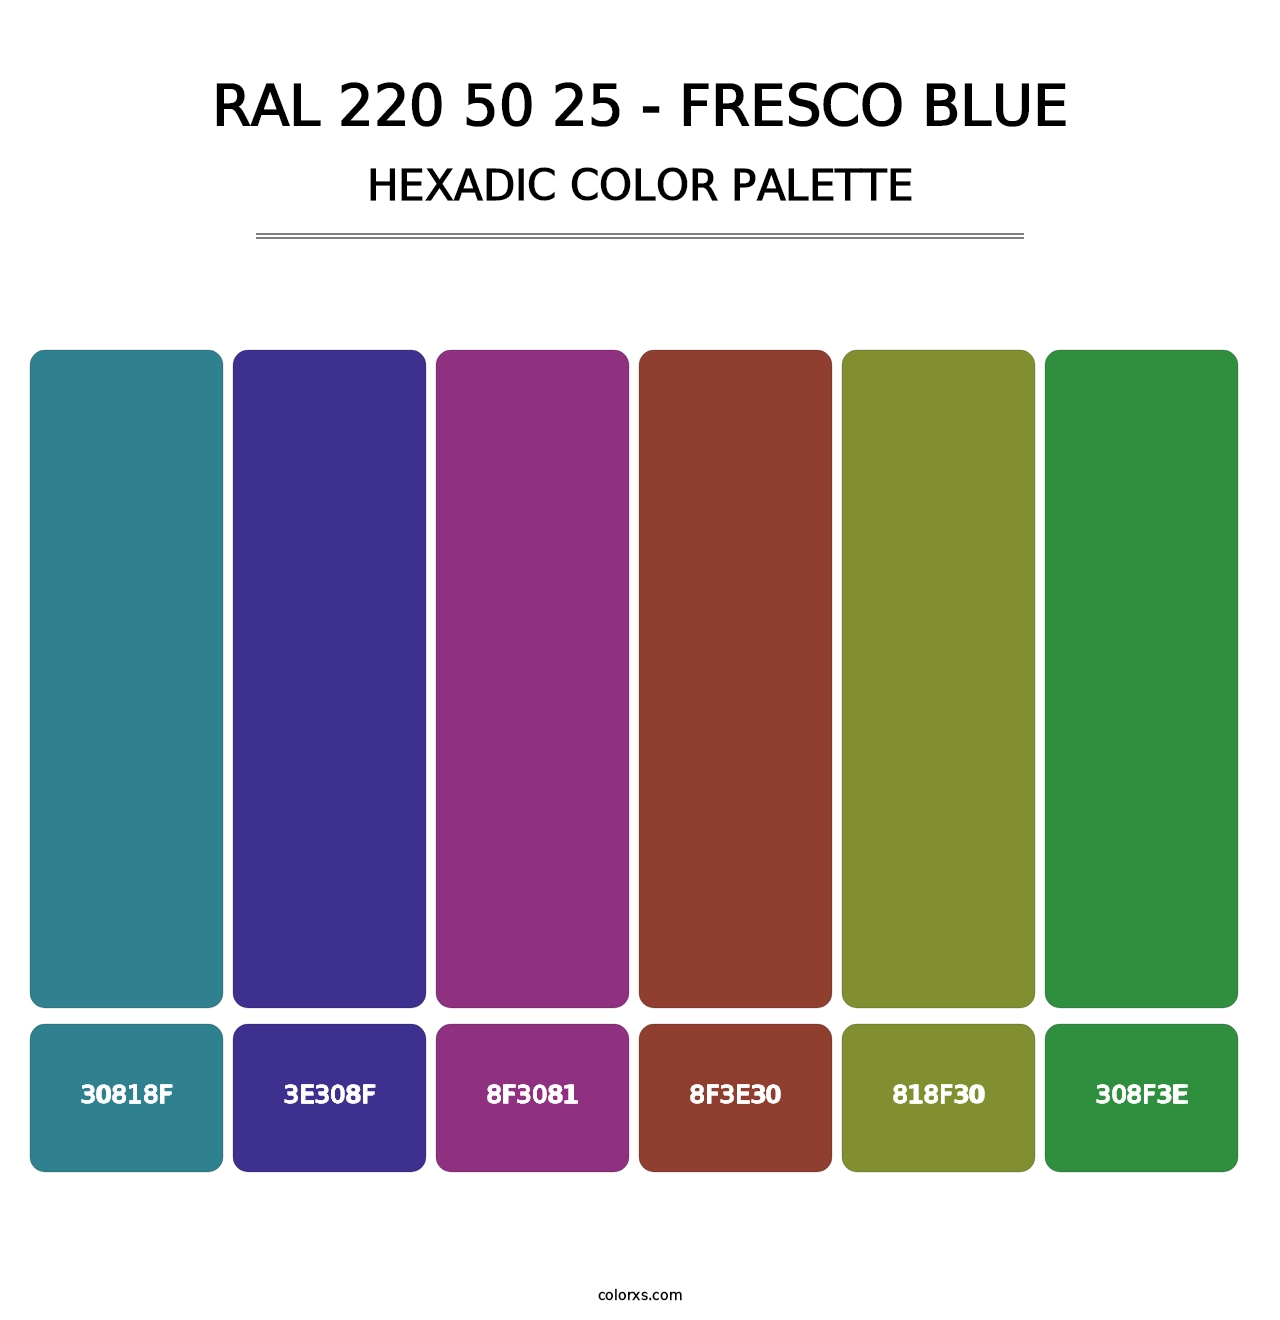 RAL 220 50 25 - Fresco Blue - Hexadic Color Palette